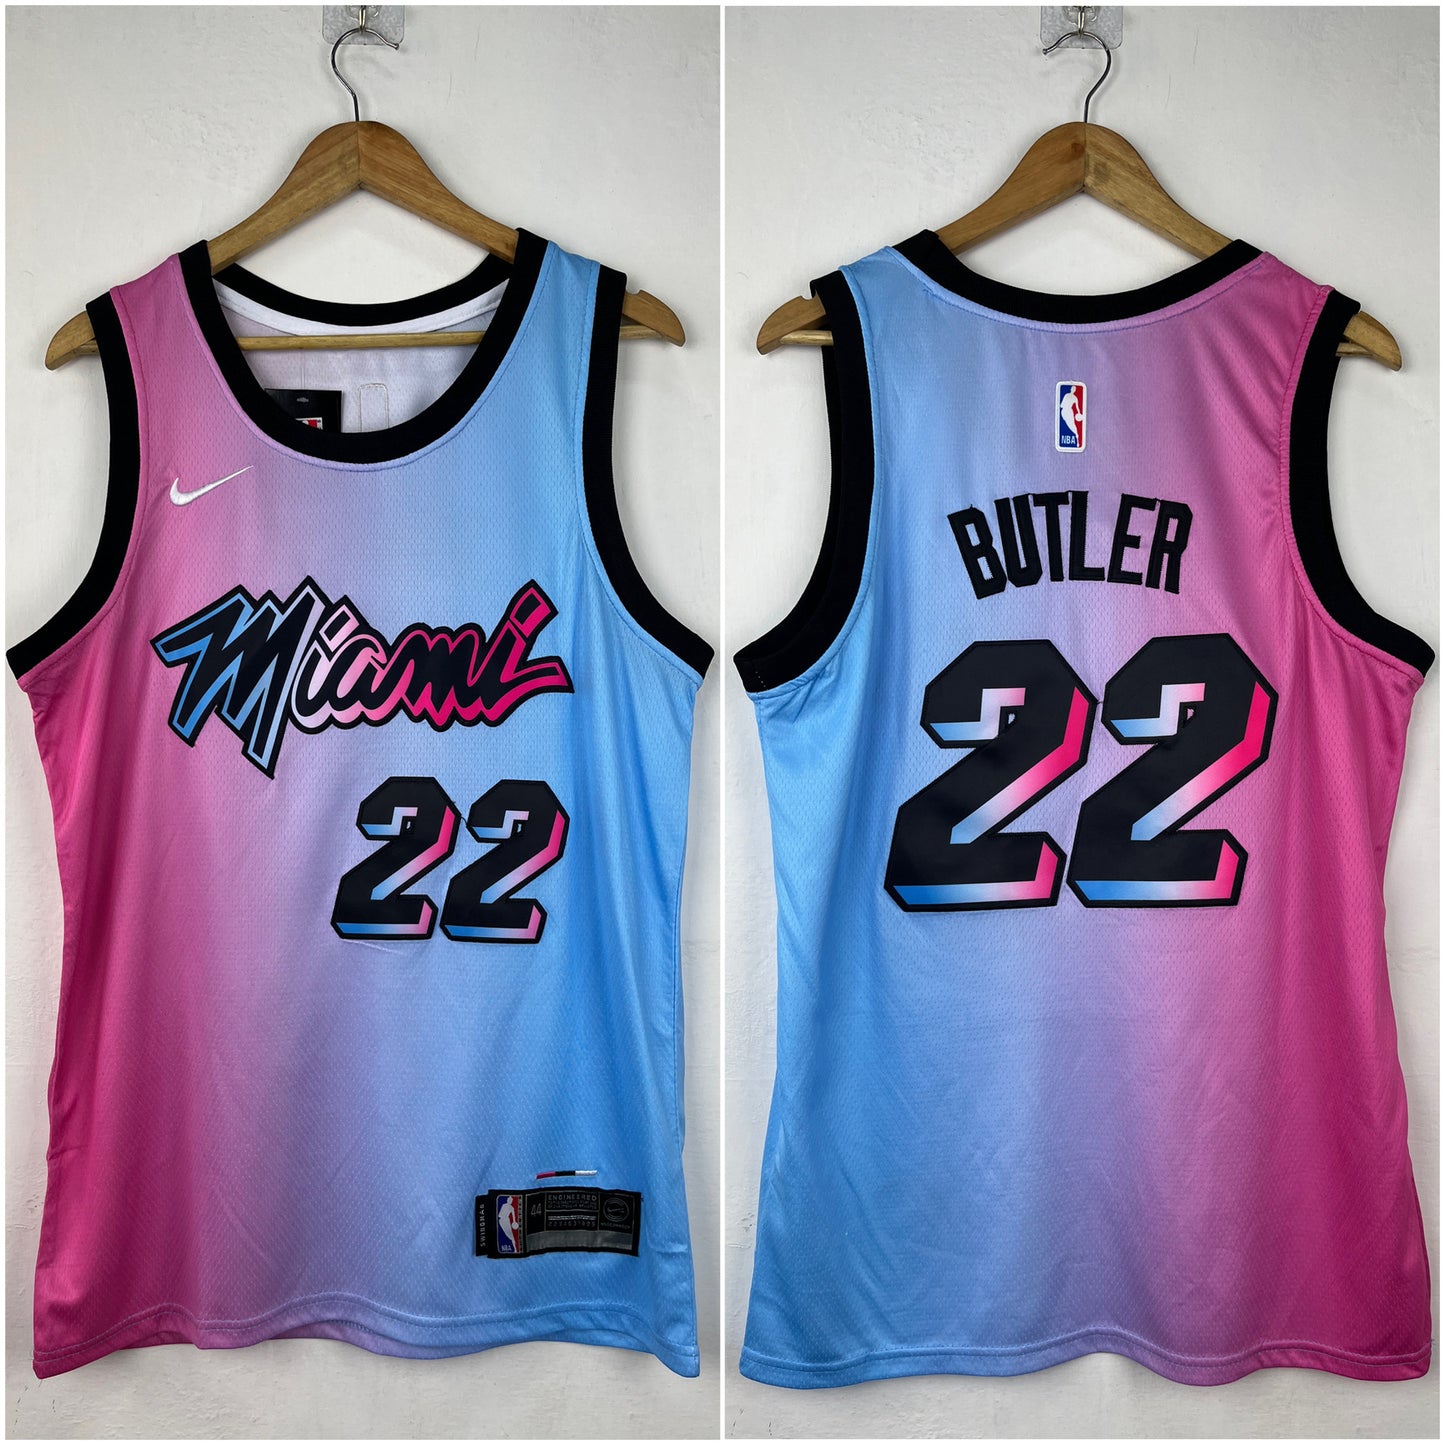 BUTLER 22 Pink & Blue Miami Heat NBA Jersey